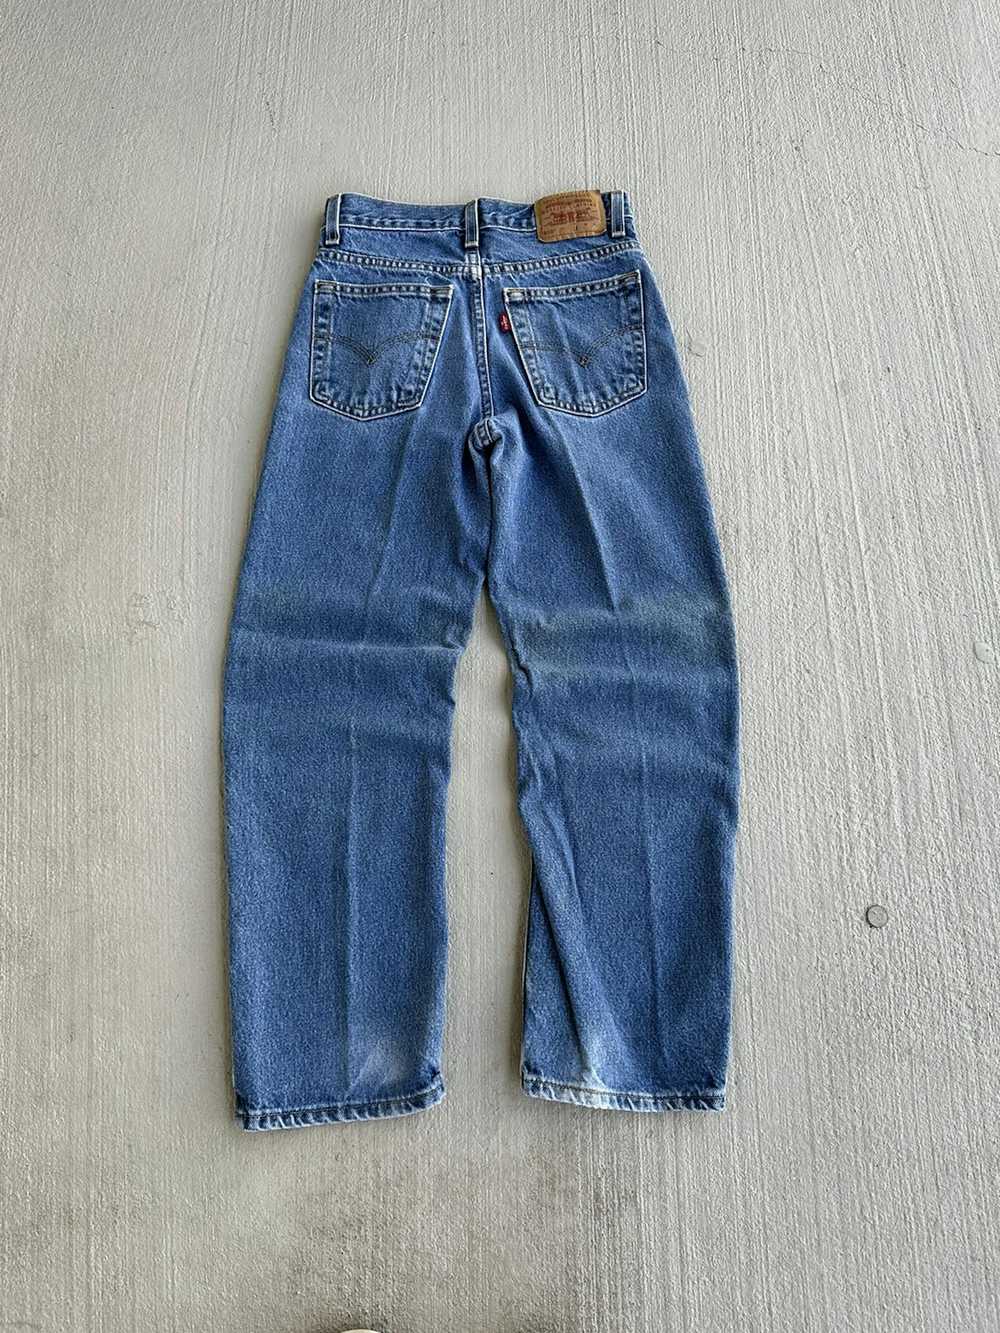 Levi's × Streetwear × Vintage Vintage Levi’s Jeans - image 1